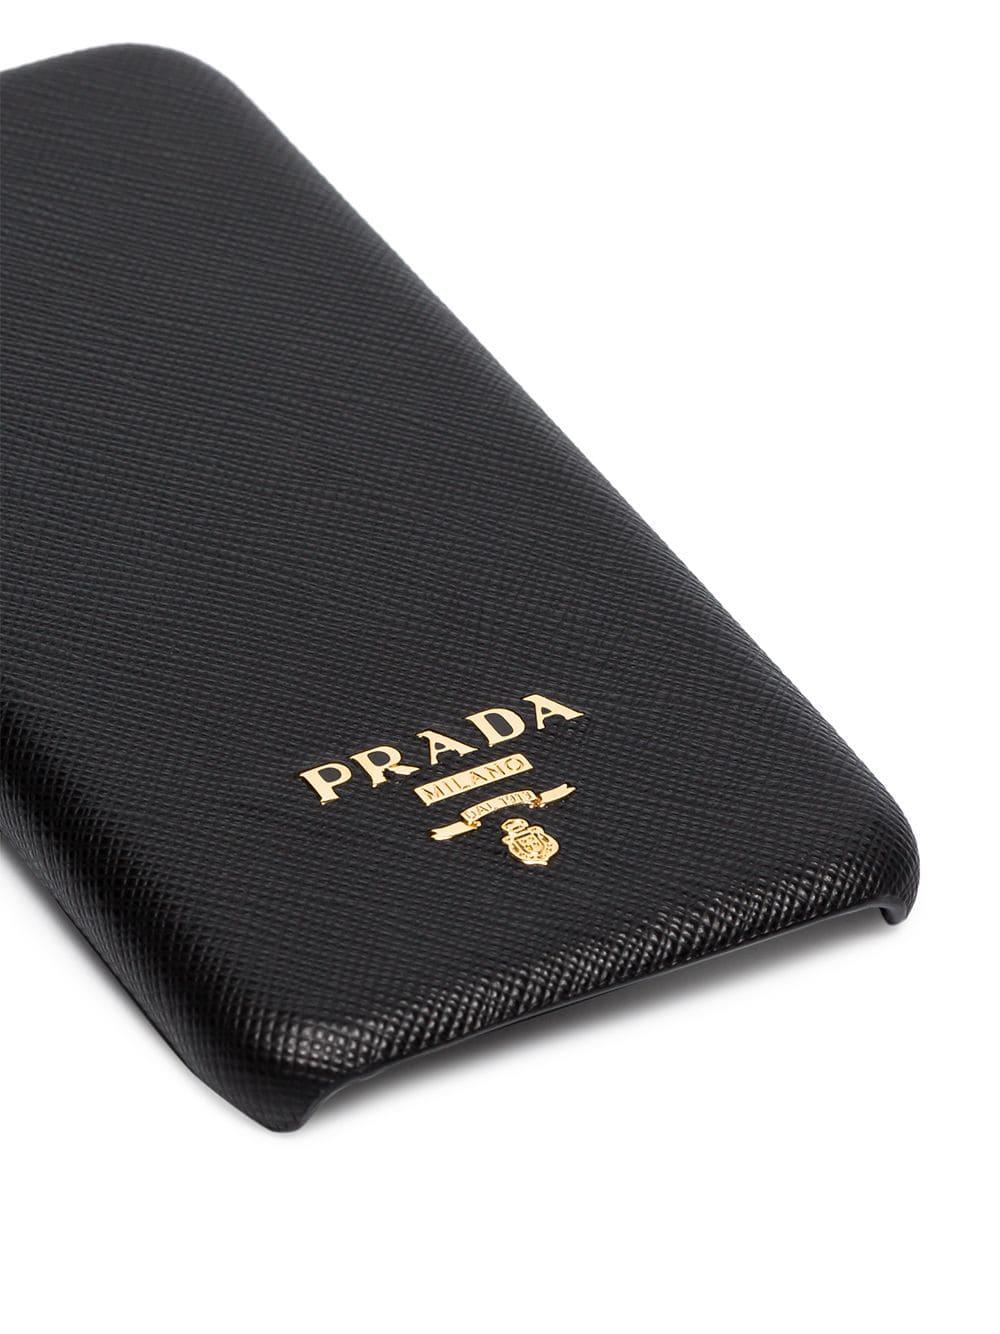 Prada Black Leather Logo Iphone X Case 